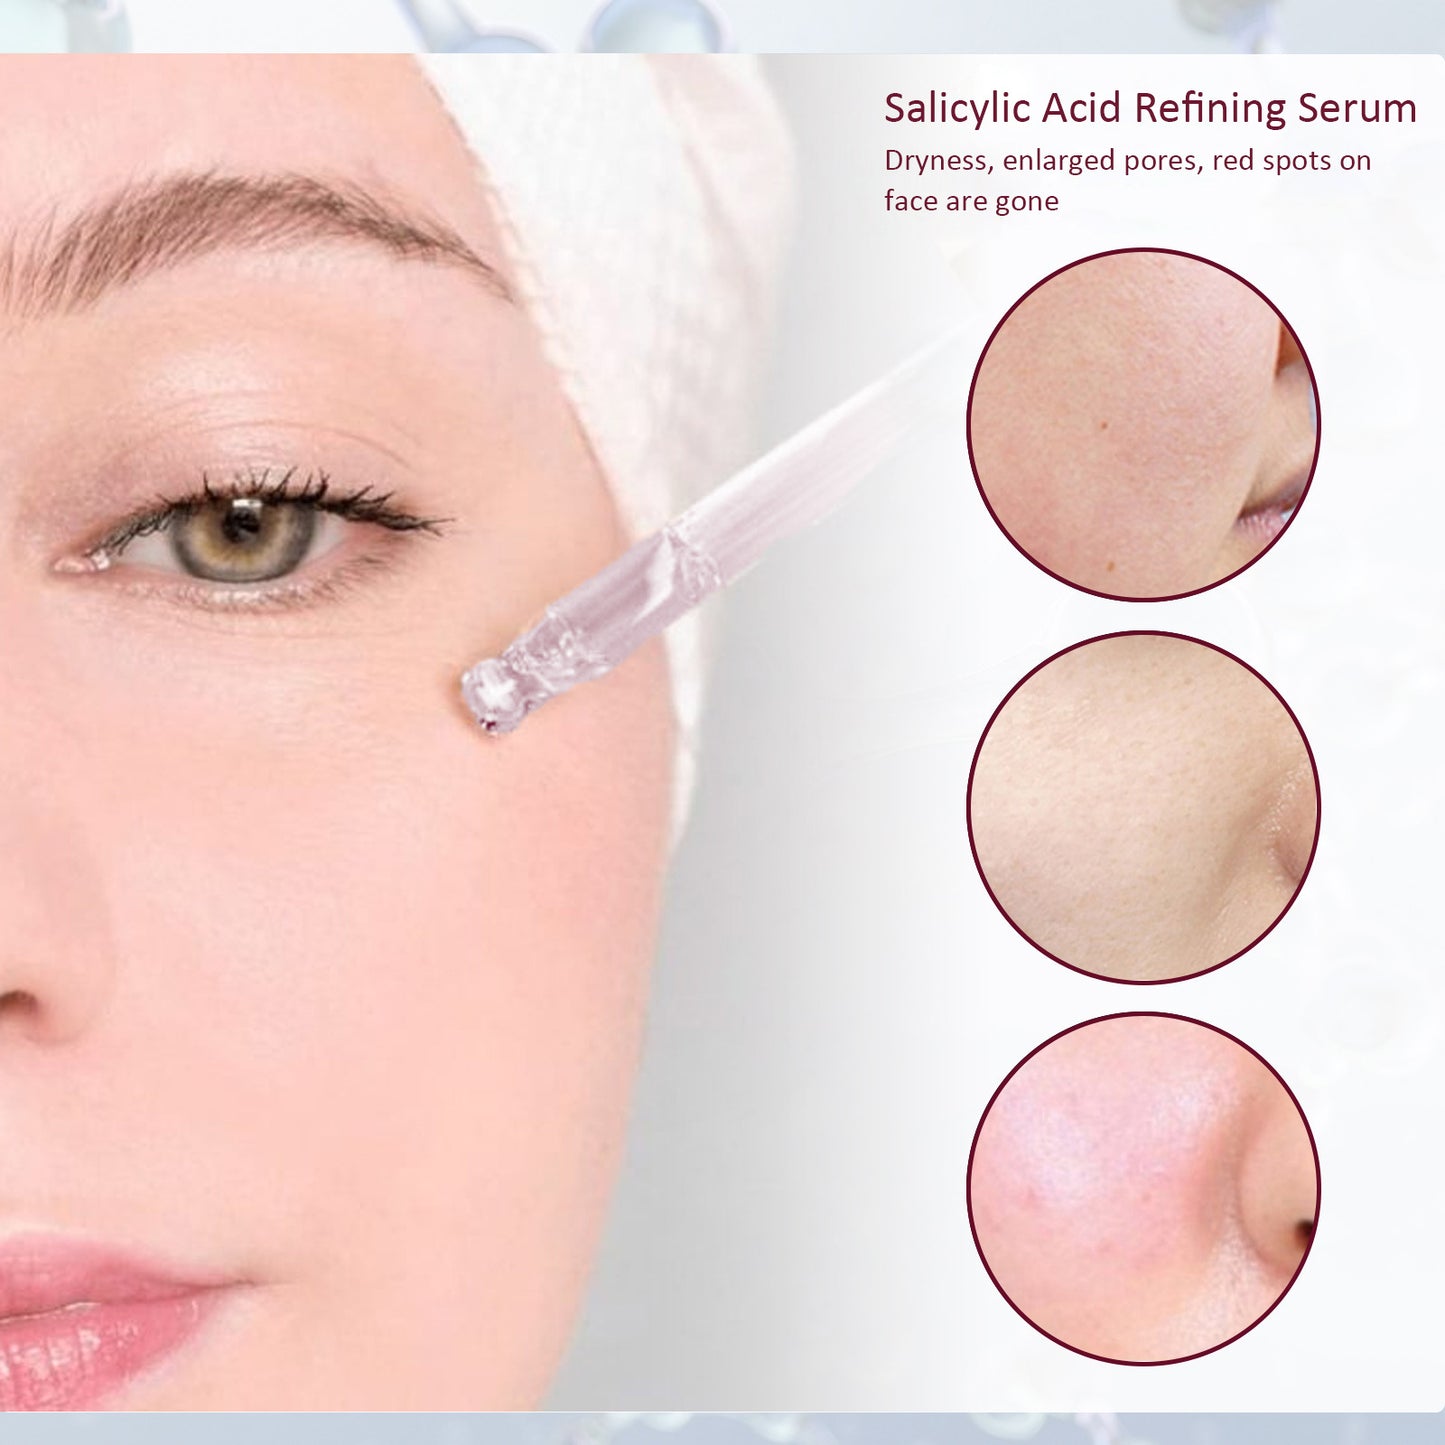 EELHOE Salicylic Exfoliant Facial Serum Facial Serum for Brightening Exfoliating and Hydrating(30ml)